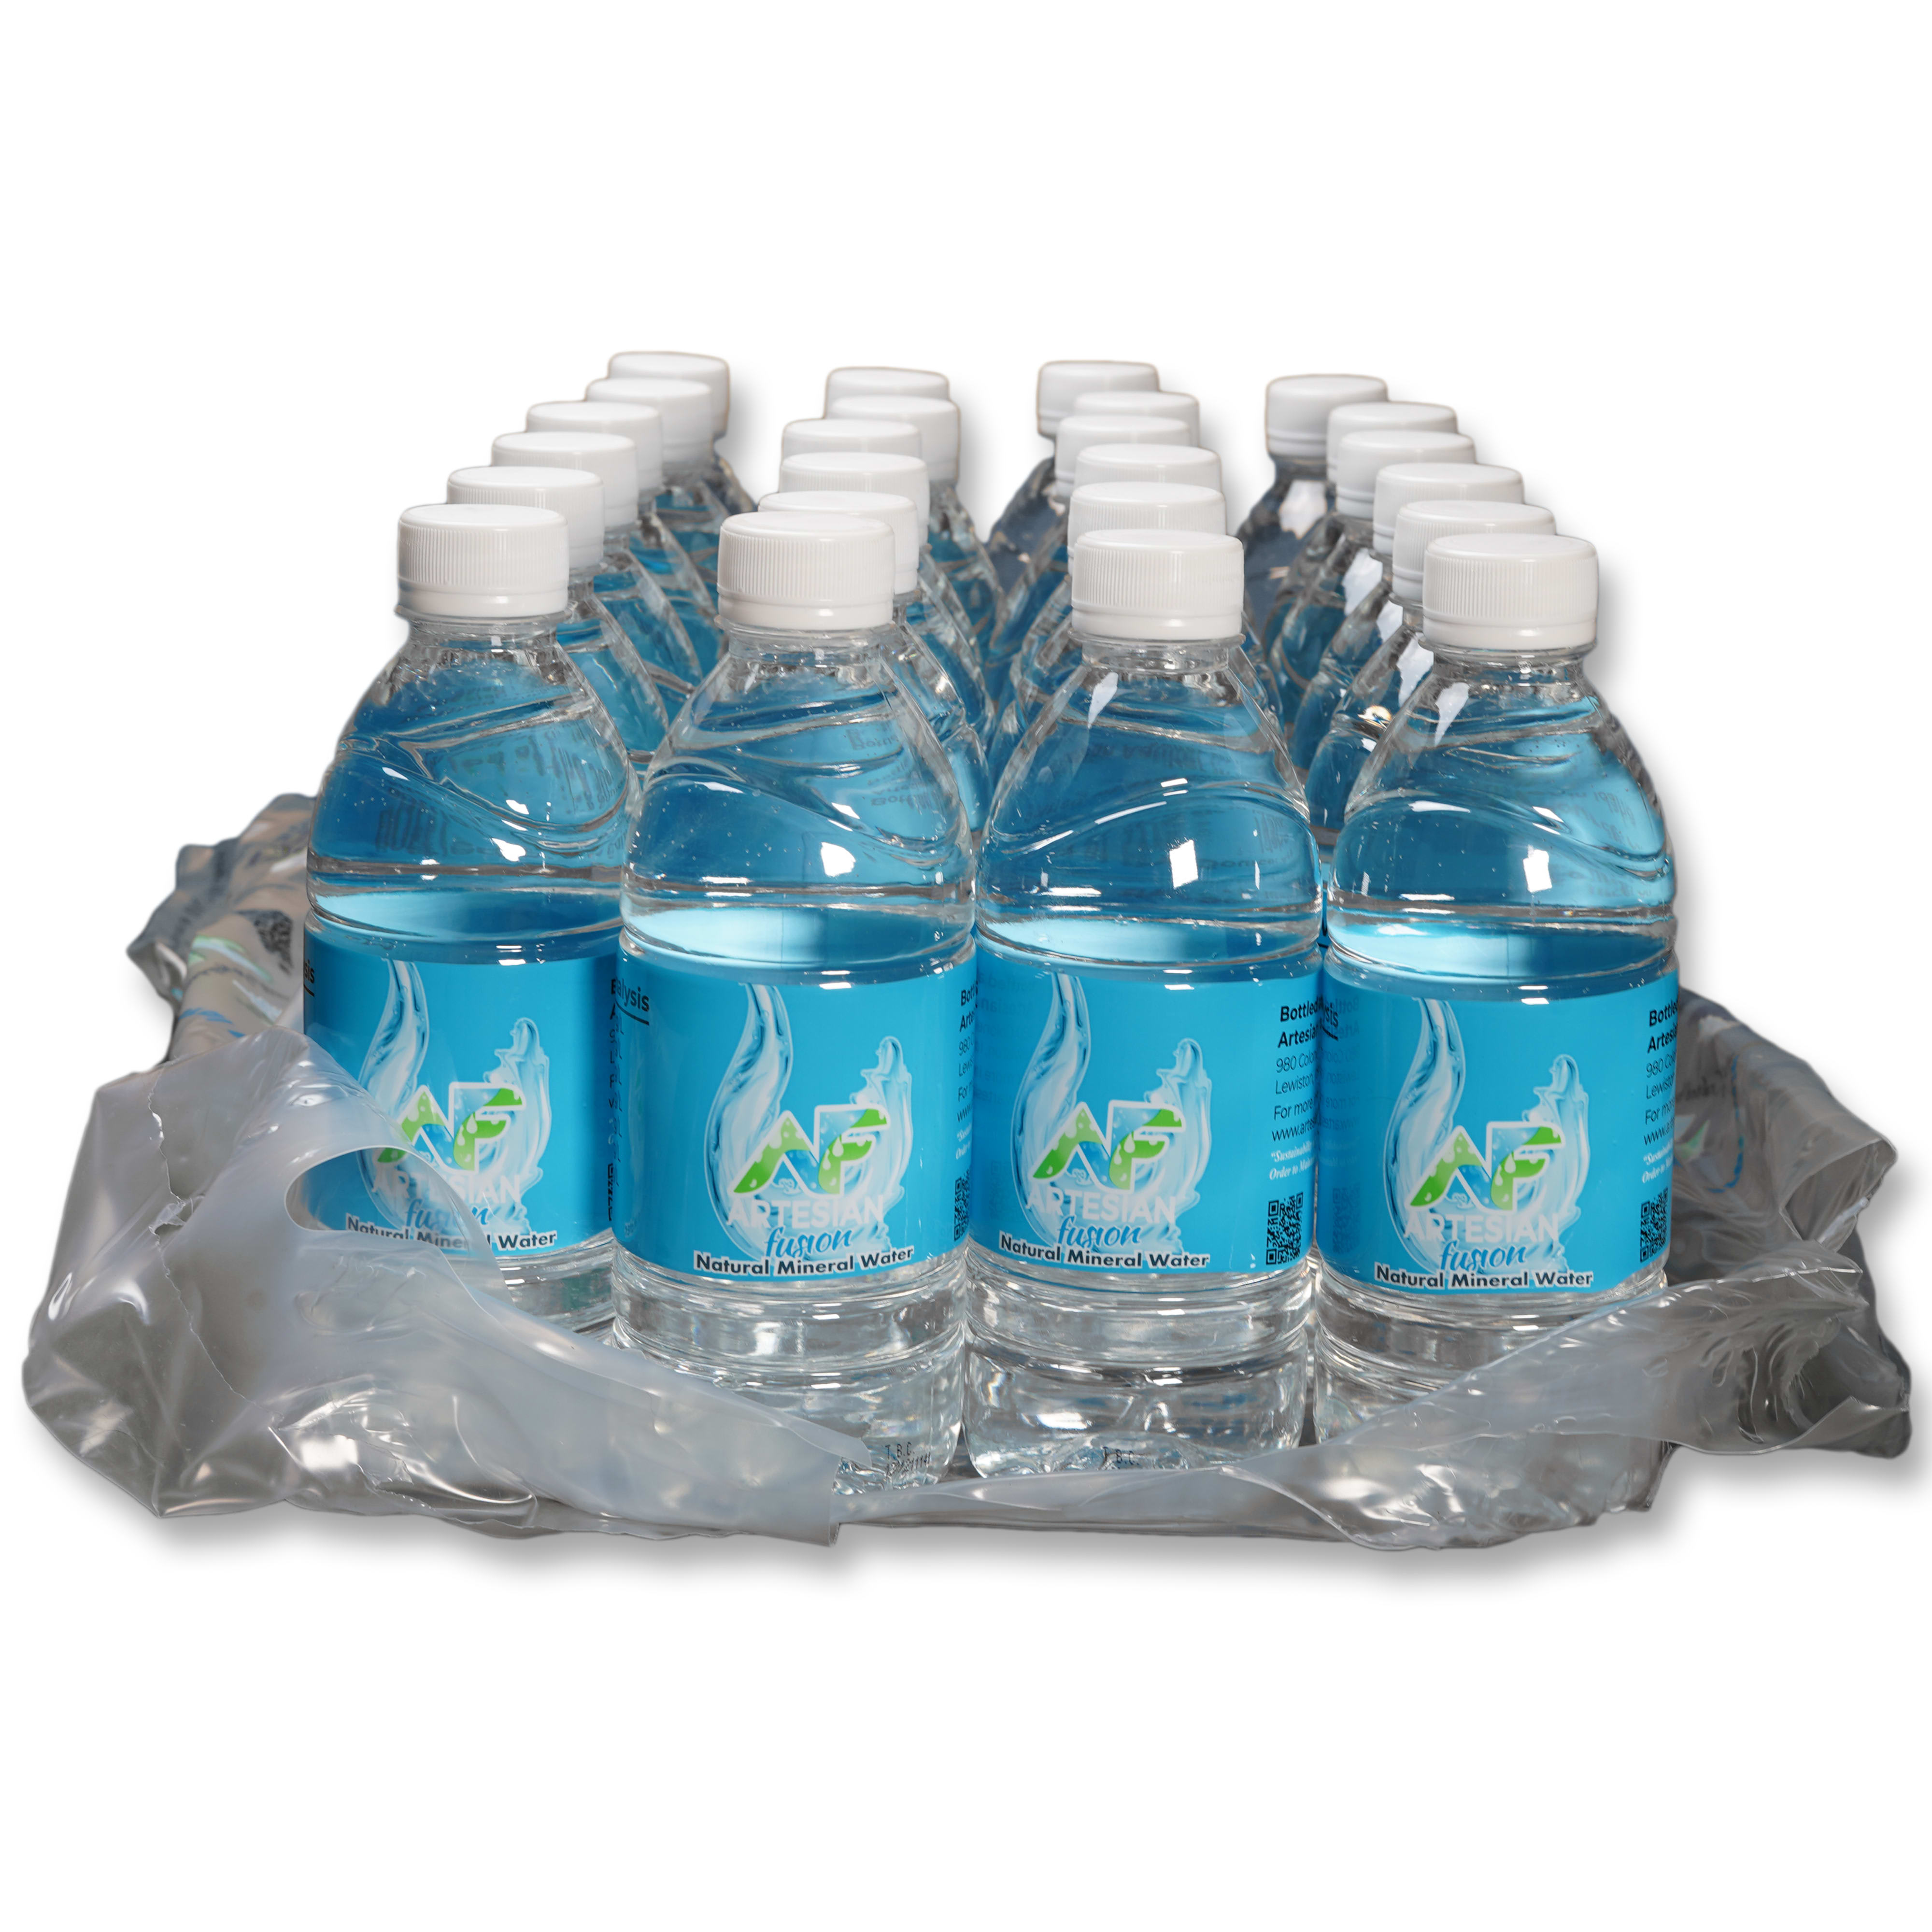 Artesian Water / Louisville / Ky. - Dupont Mineral Water Bottle